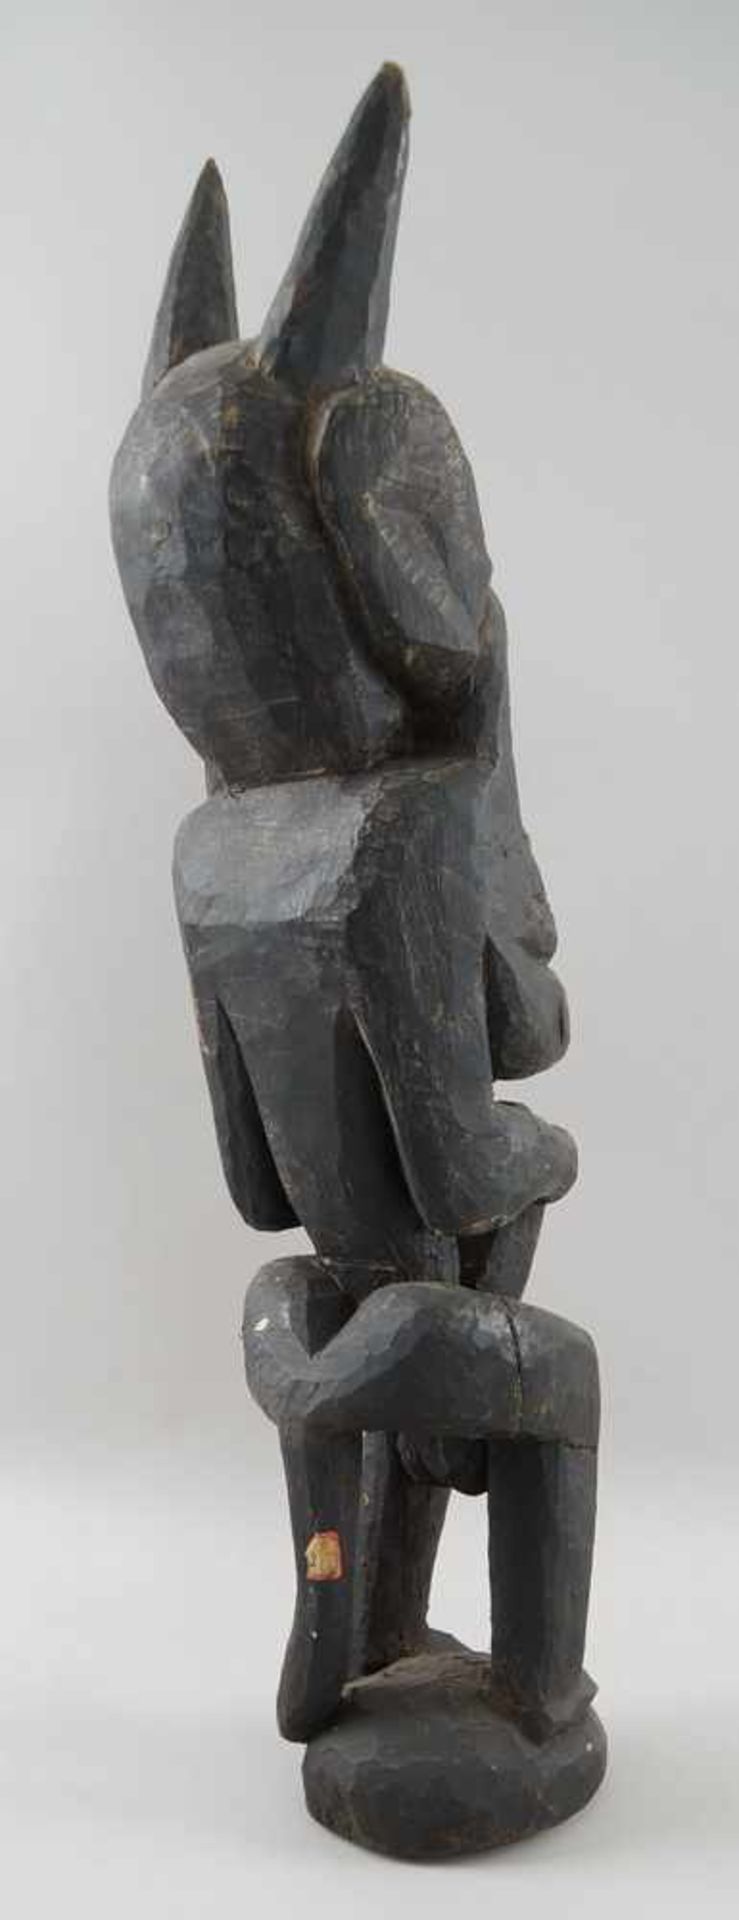 Fruchtbarkeitsskulptur / Ritualskulptur, Holz geschnitzt, Umbanda/Quimbanda-Brasilien, H64 cm - Bild 3 aus 3